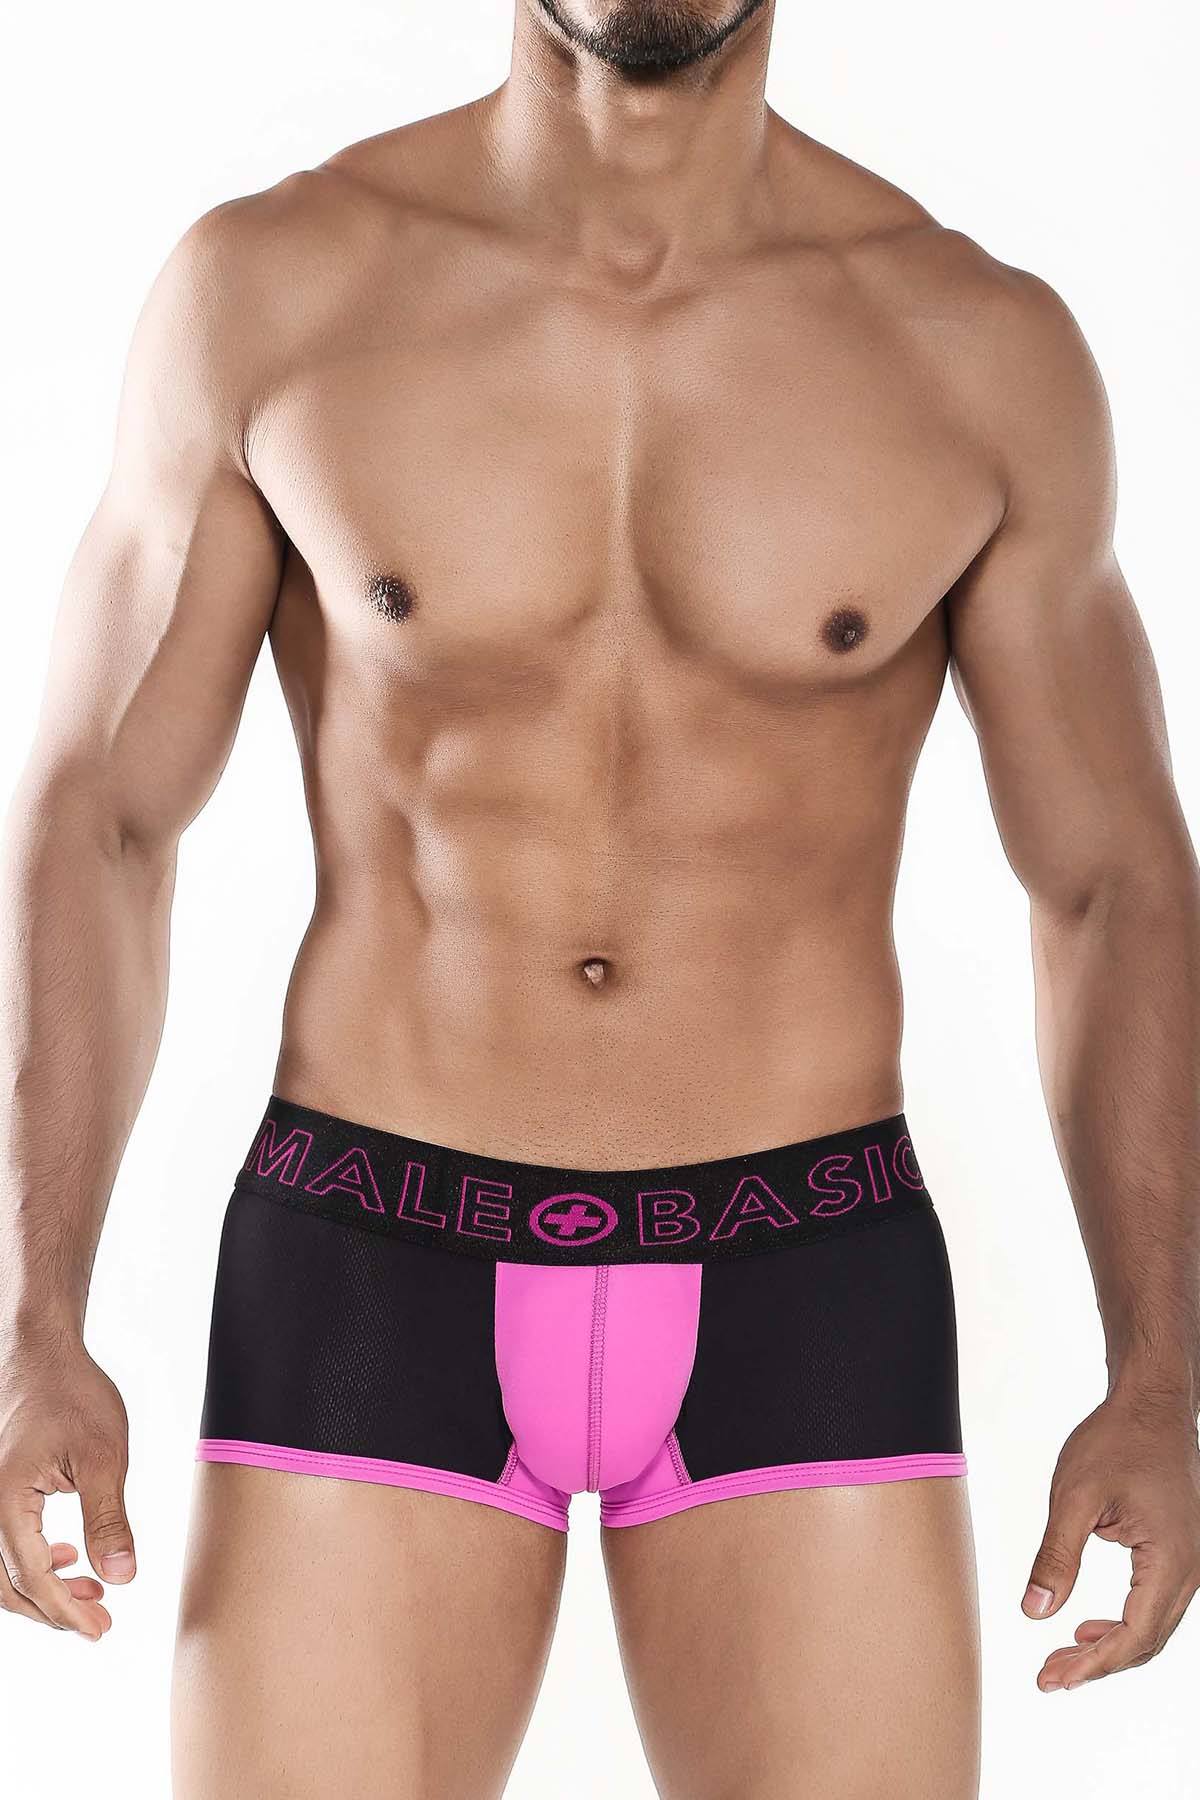 Male Basics Hot-Pink Neon Trunk